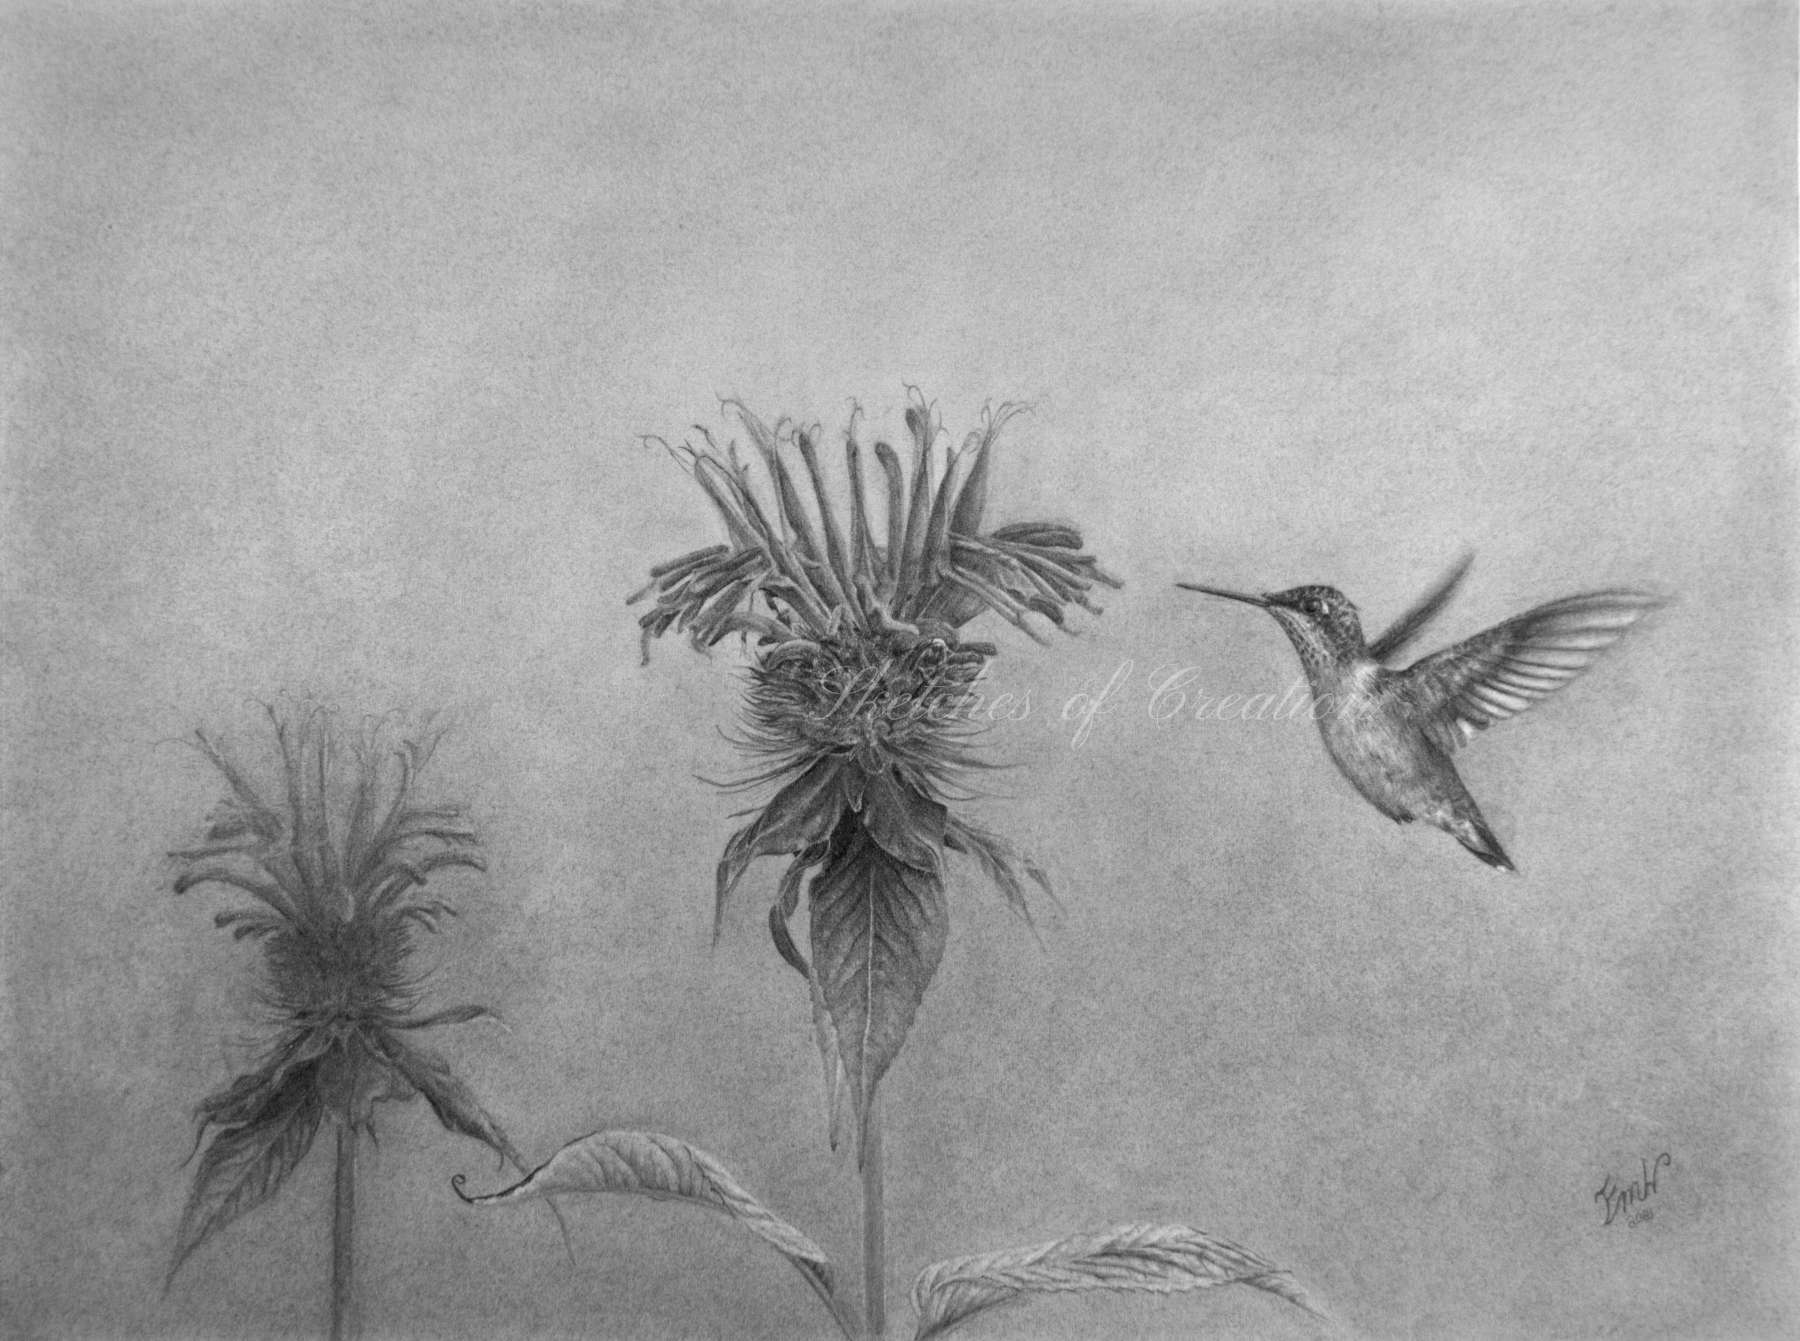 A drawing of a hummingbird hovering near beebalm